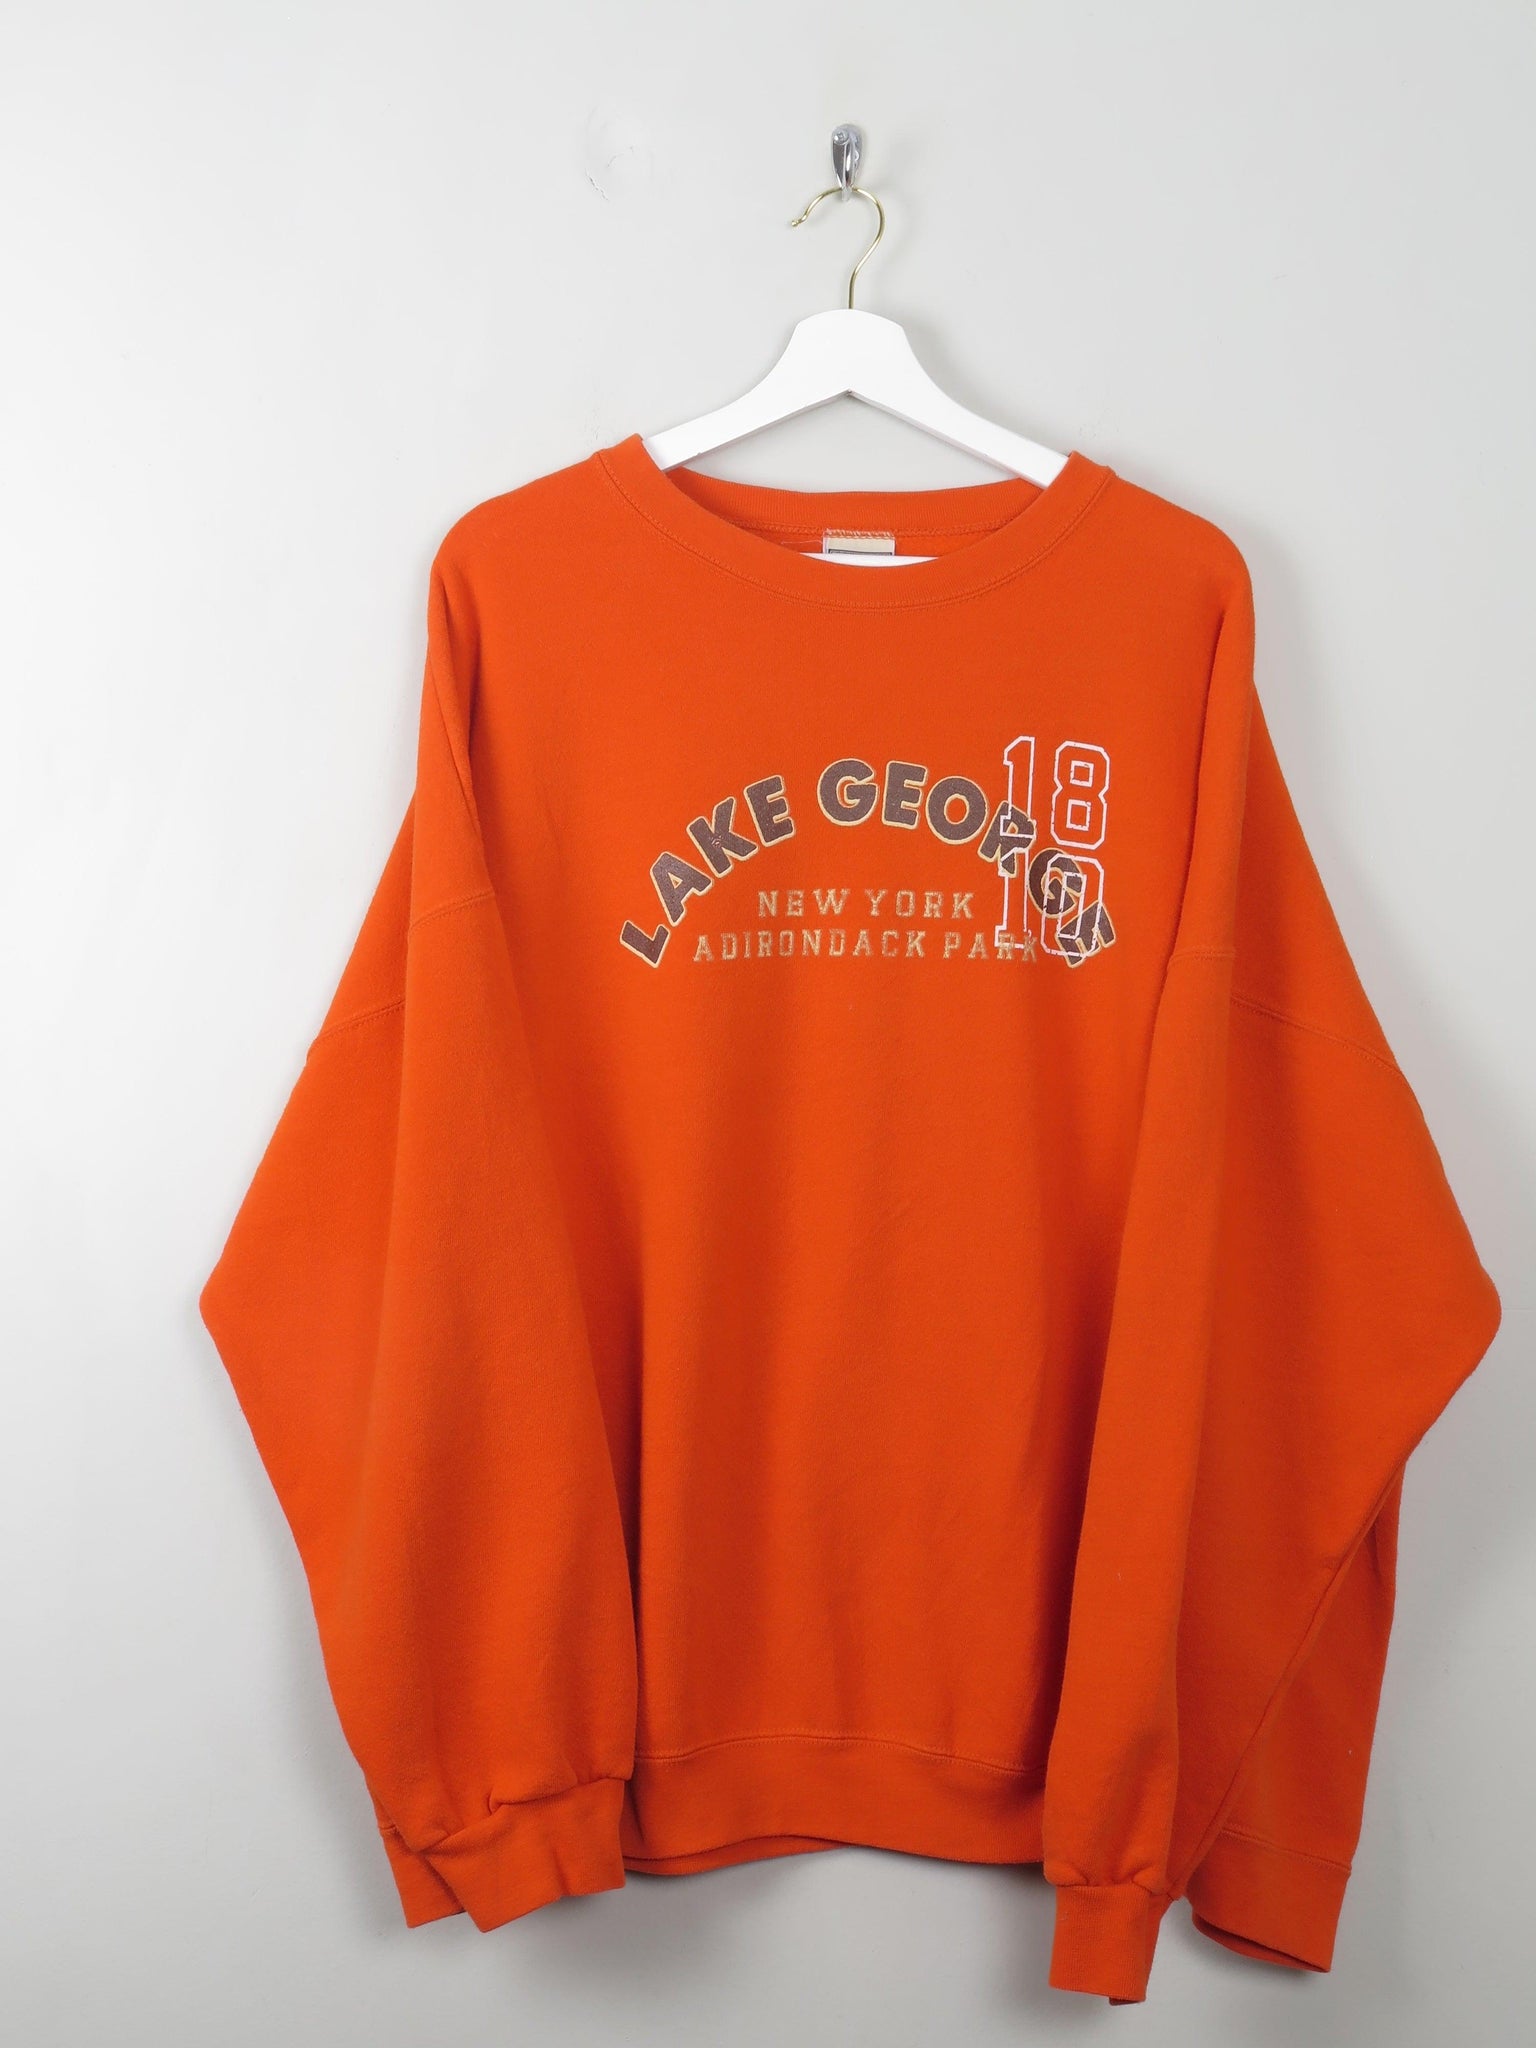 Men's Vintage Lee Orange Sweatshirt XL/XXL - The Harlequin